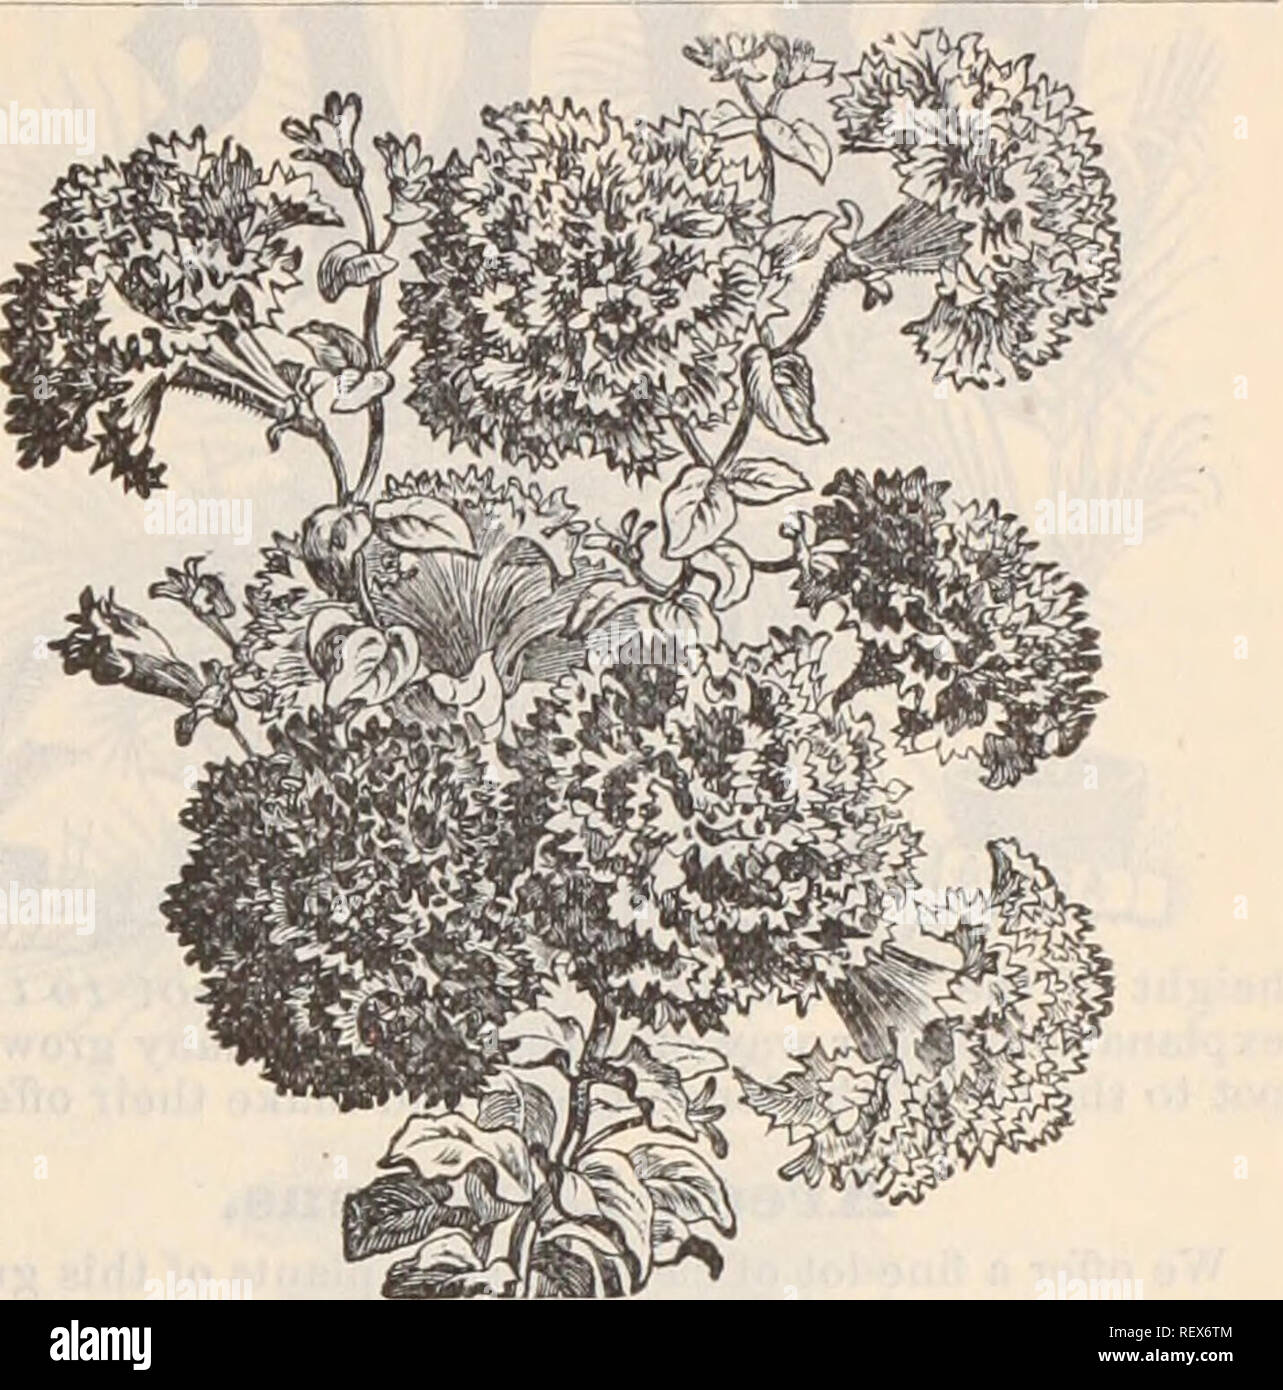 . Dreer's wholesale price list / Henry A. Dreer.. Nursery Catalogue. FINE FERNS.-(Continued.) Size pots Cyrtomium Falcatum 2 '' Opaca.. U ii Lomaria Ciliata. Nephrodium Hertipes. 3 &quot; &quot; 4 Davallia Stricta 2J &quot; 3 &quot; Fijiensis Plumosus 3 &quot; &quot; Majus 3 Dictyogramma Japonica 3 Didymochlaena Truucatula 3 Doodia Aspera multifida 2J &quot; &quot; &quot; 3 Qymnogramma Sulphurea 3 Lastrea Aristata Variegata 2 3 &quot; Chrysoloba 2} '« &quot; 3 2i 3 n 3 Lygodium Scandens 3 &quot; Dichotomum 3 Microlepia Hirta Crista 2J &quot; 3 3 5 3 2i n 3 4 6 4 4 3 n 3 5 2 3 3 2} 3 3 3 2} 3  Stock Photo